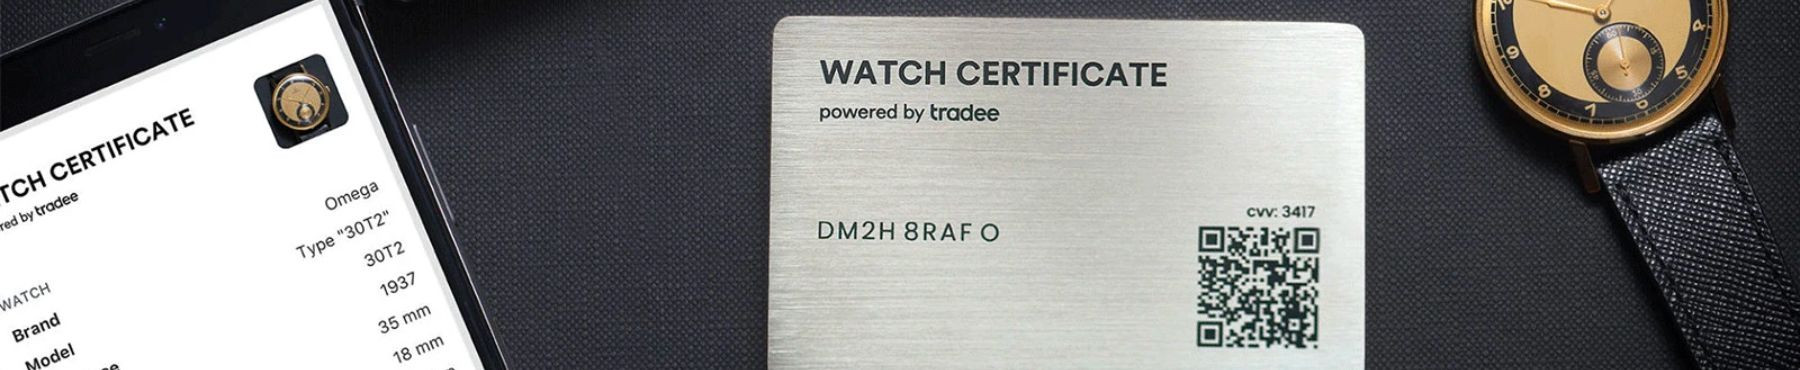 Montres avec Watch Certificate